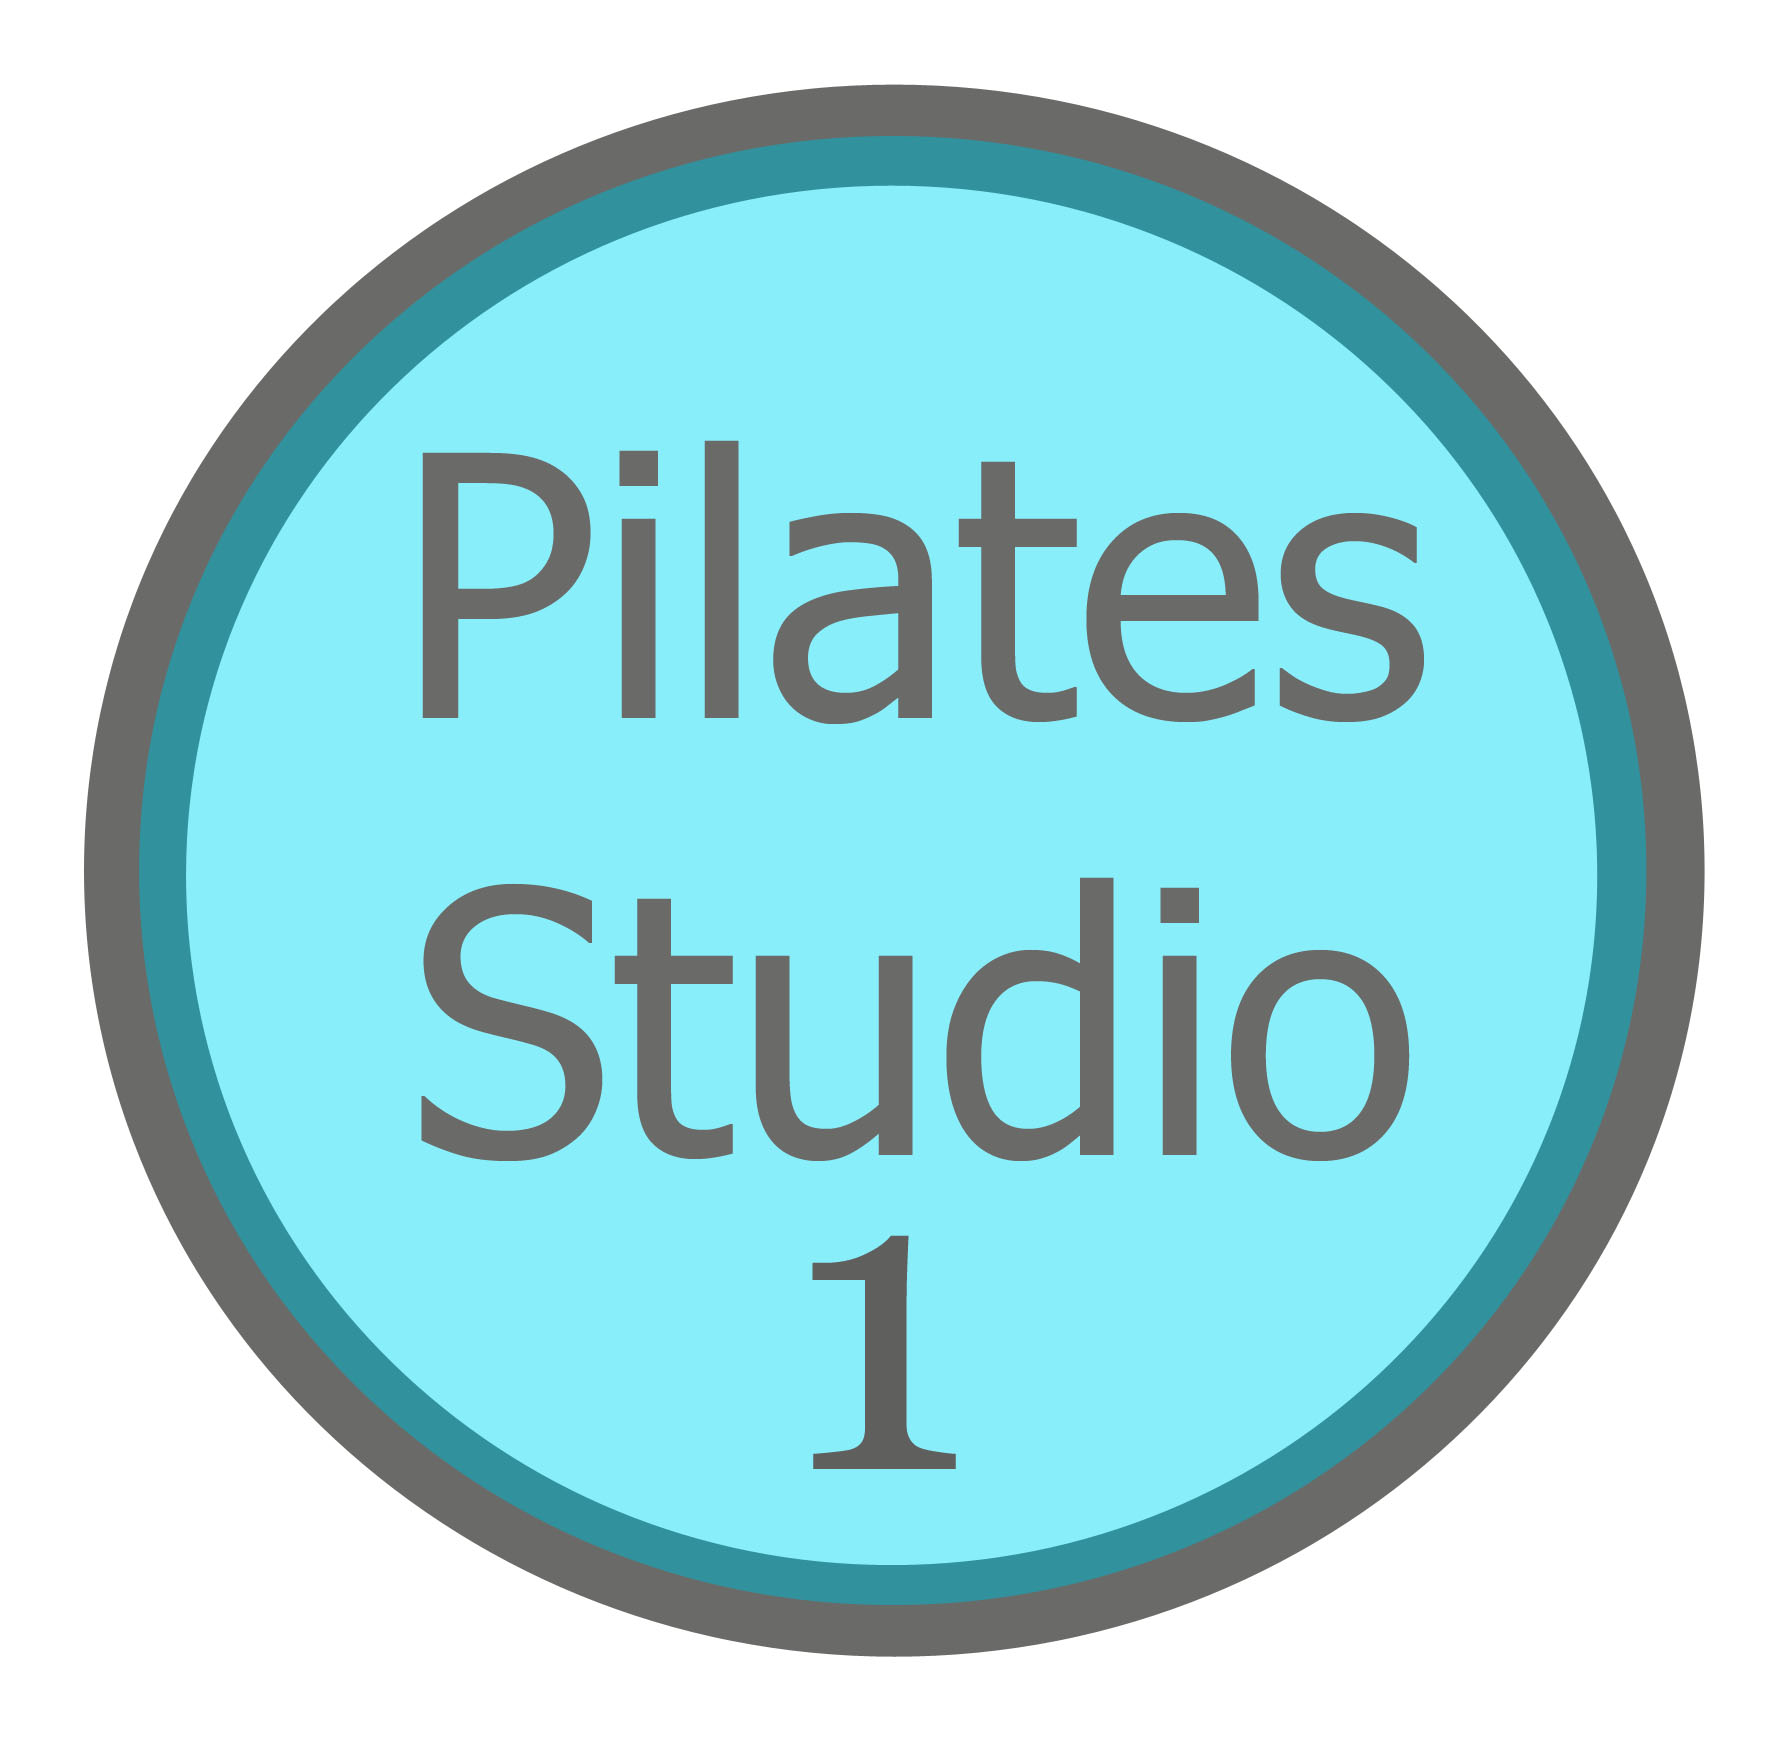 Met name band Claire Pilates Studio 1